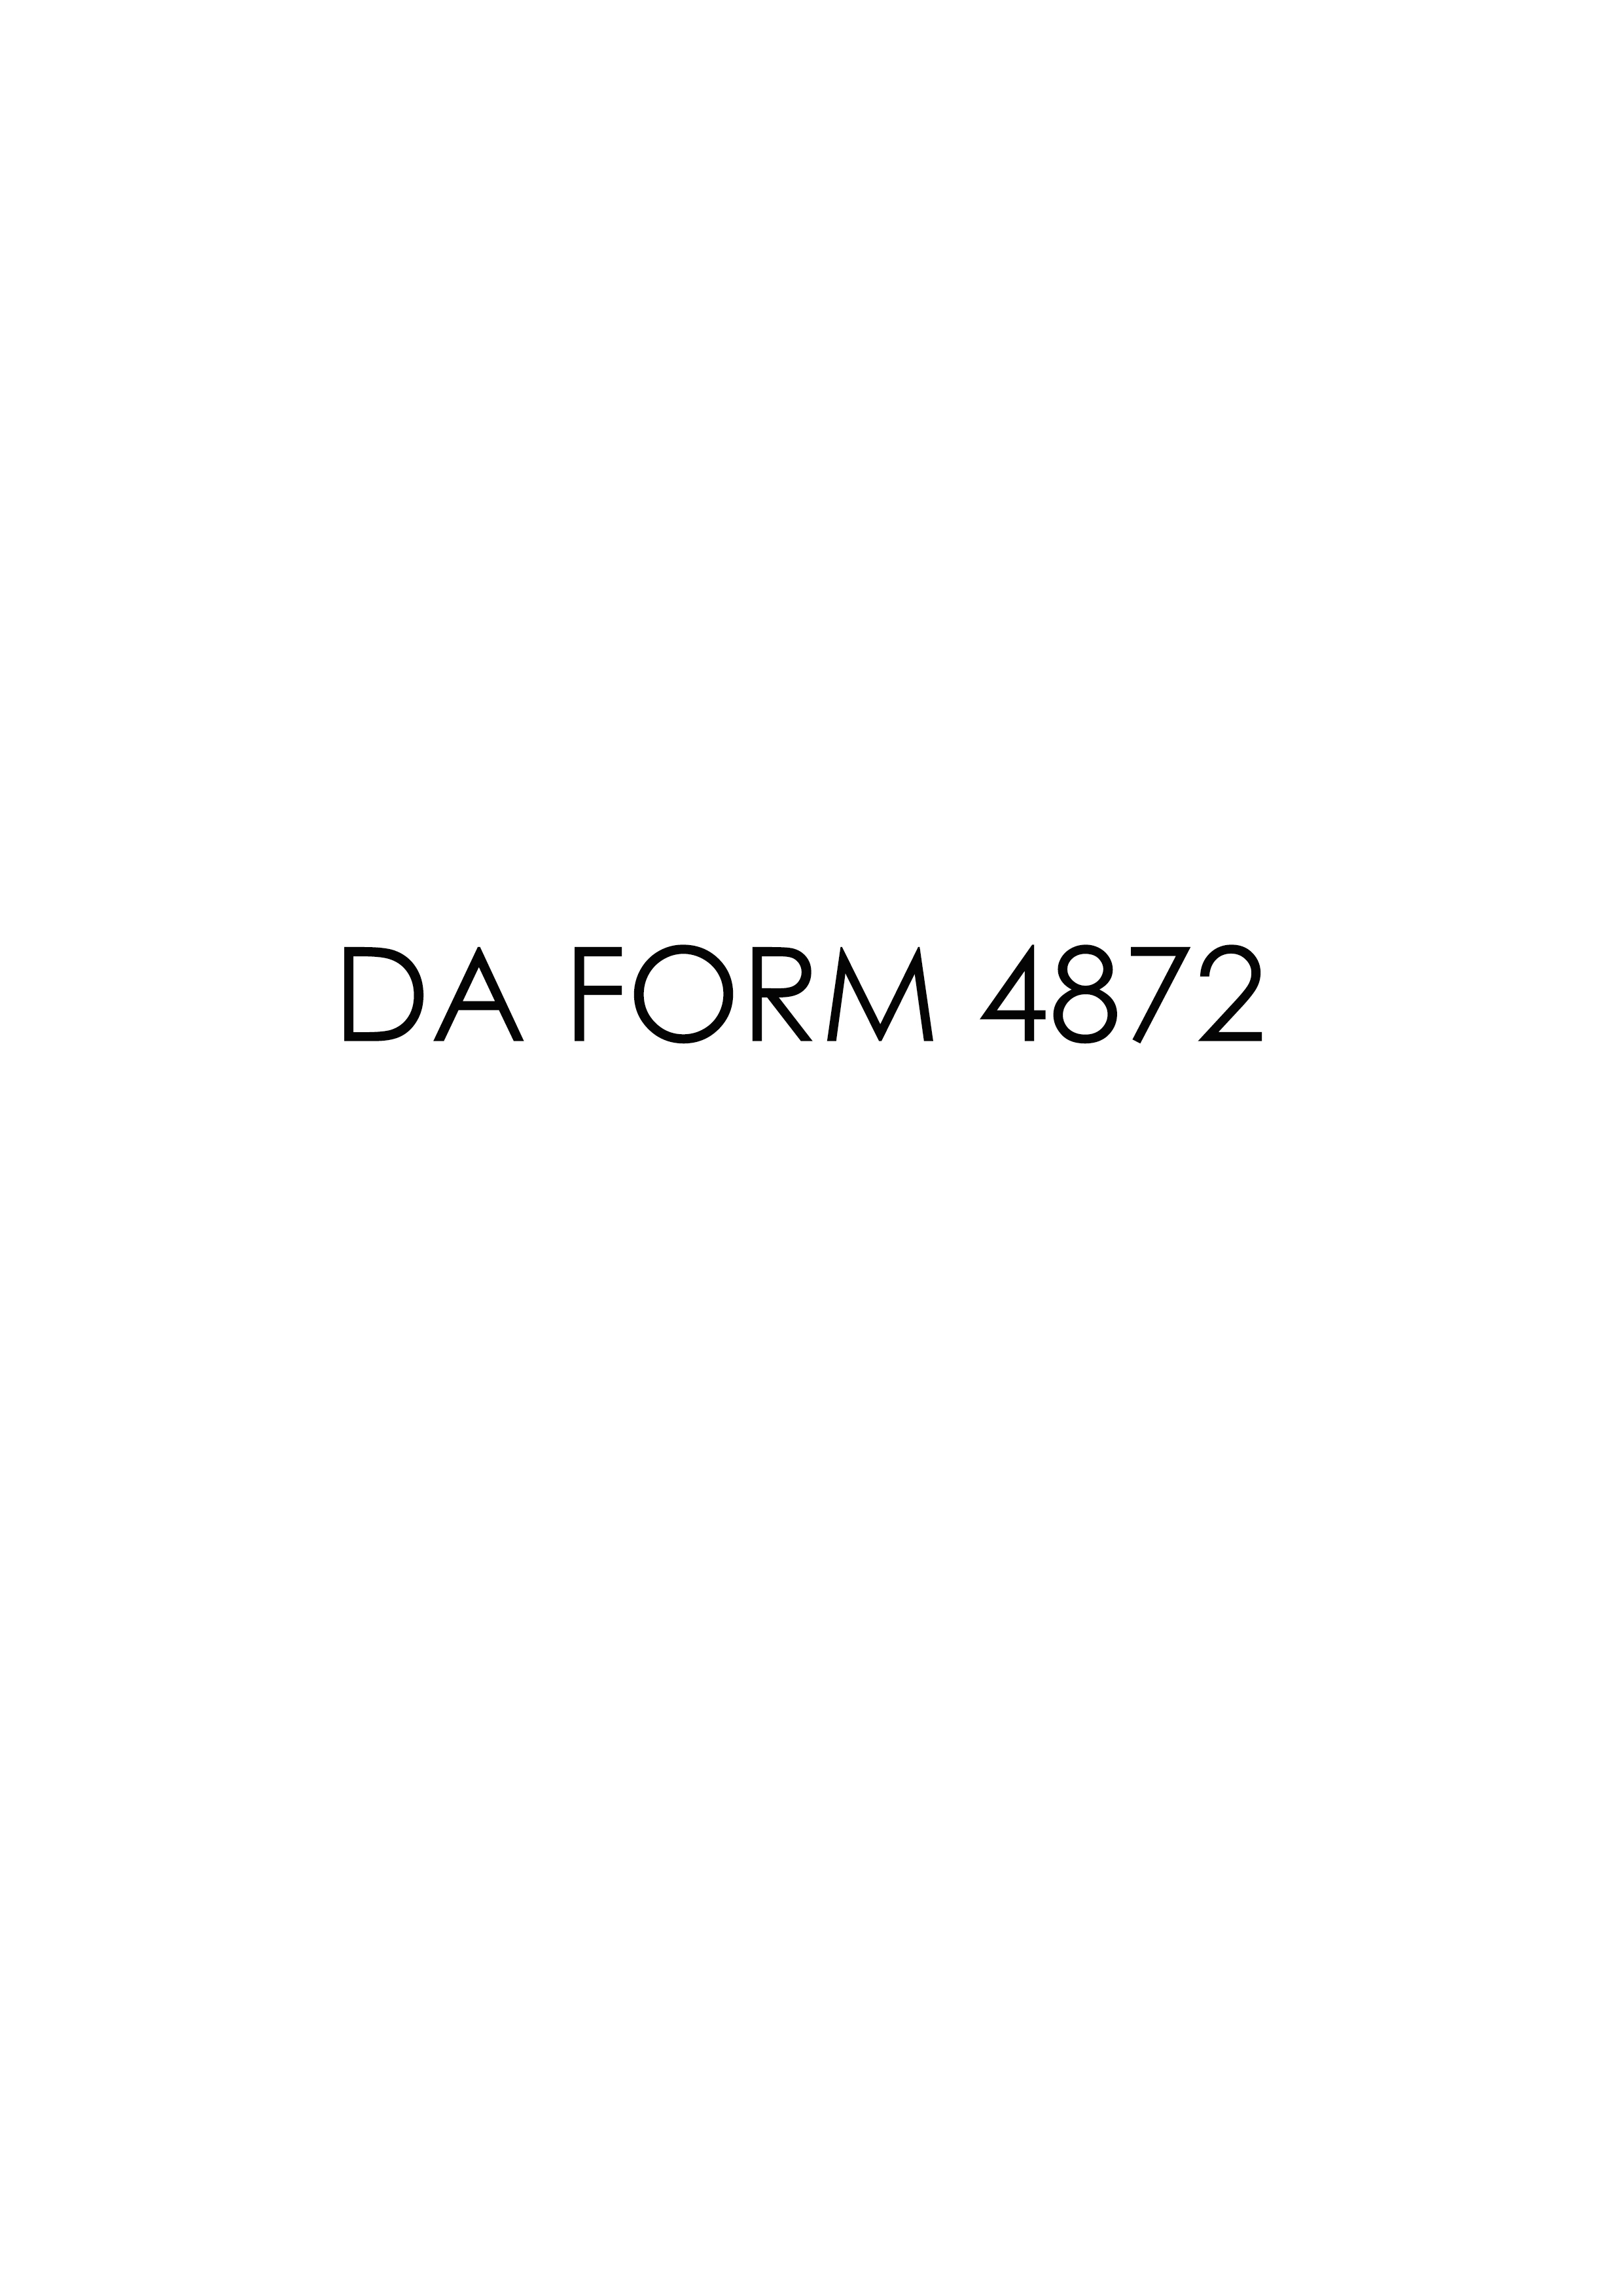 da Form 4872 fillable